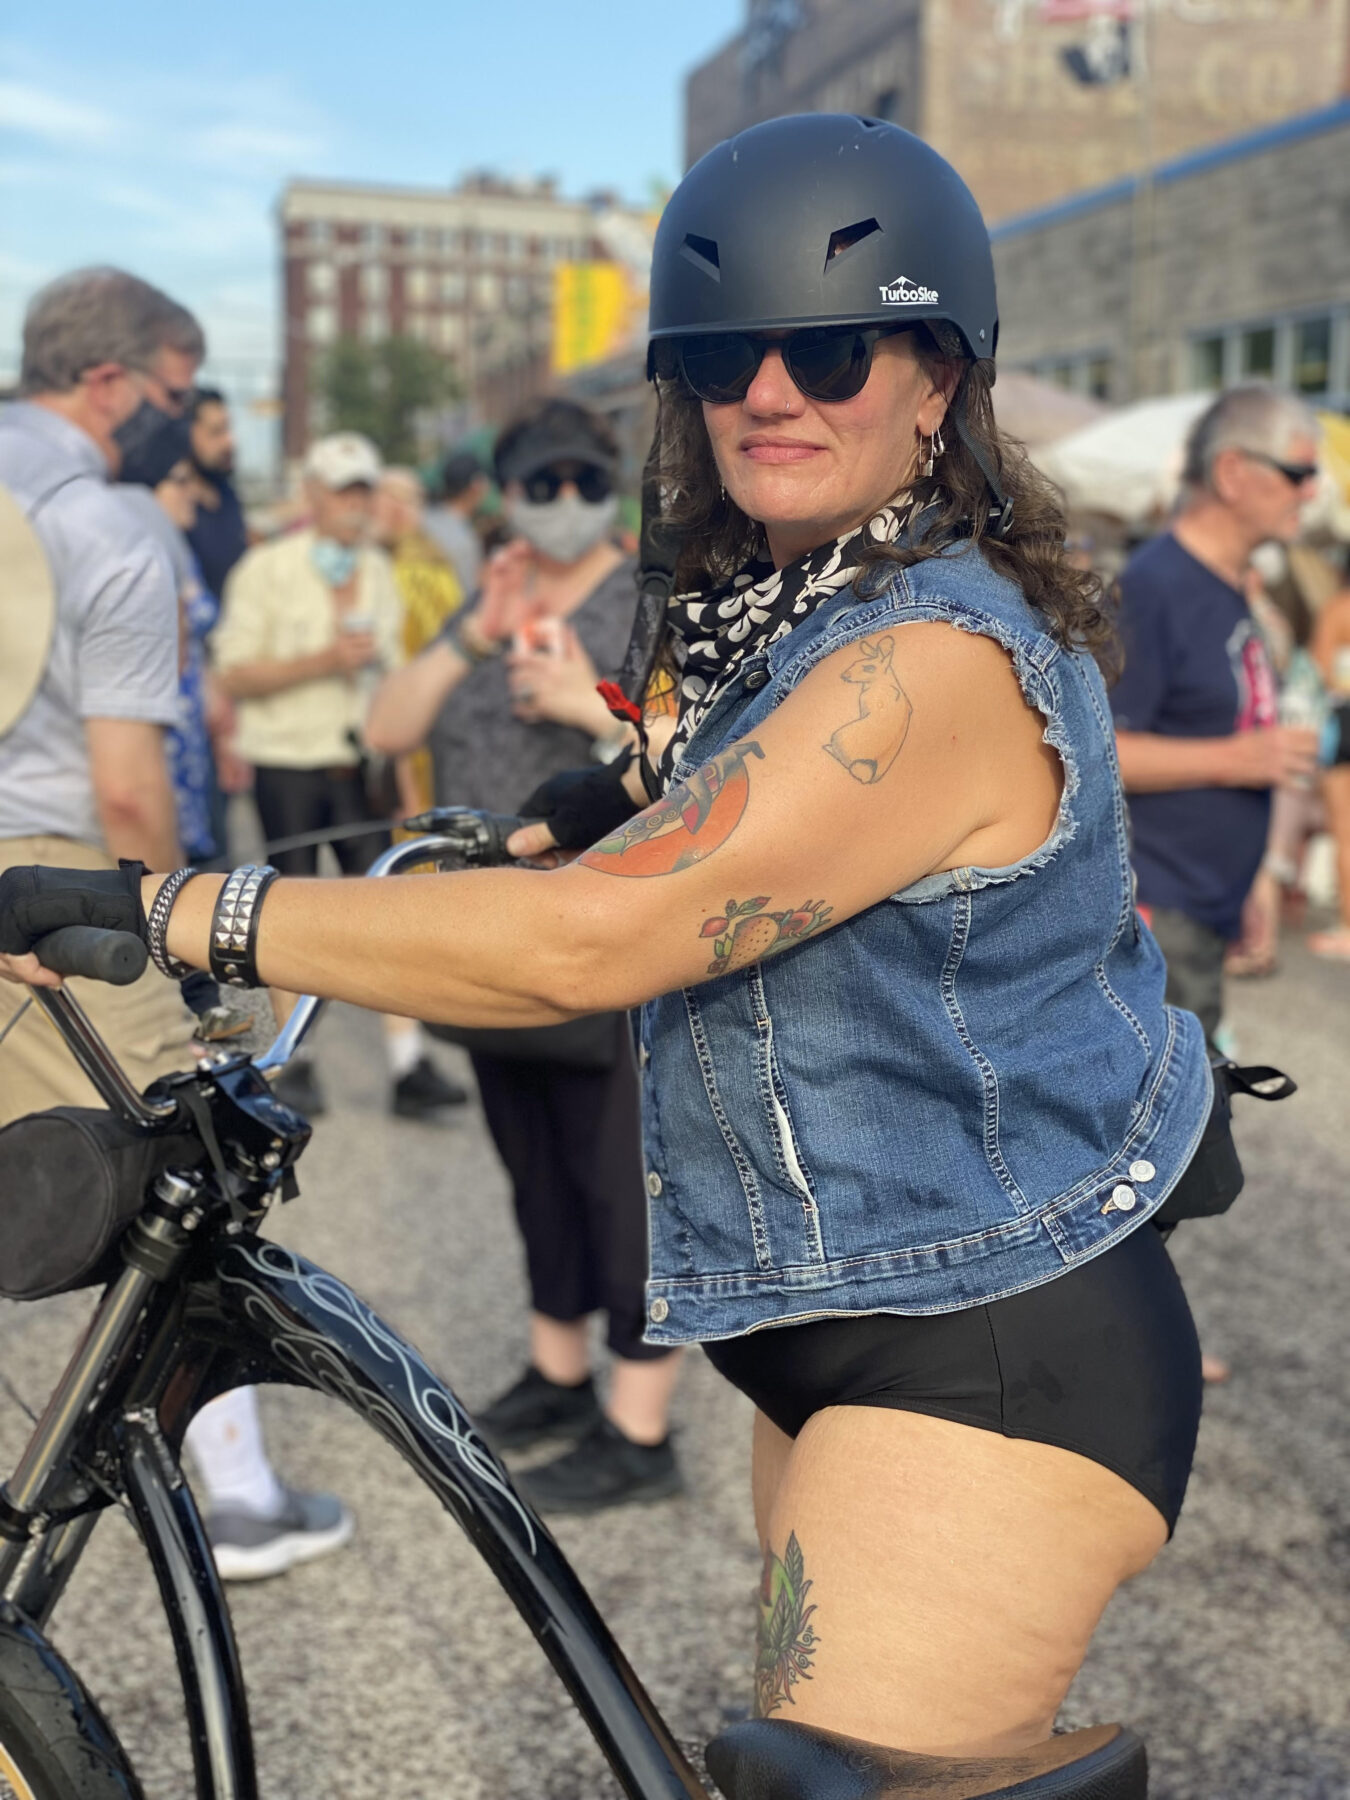 St. Louis World Naked Bike Ride